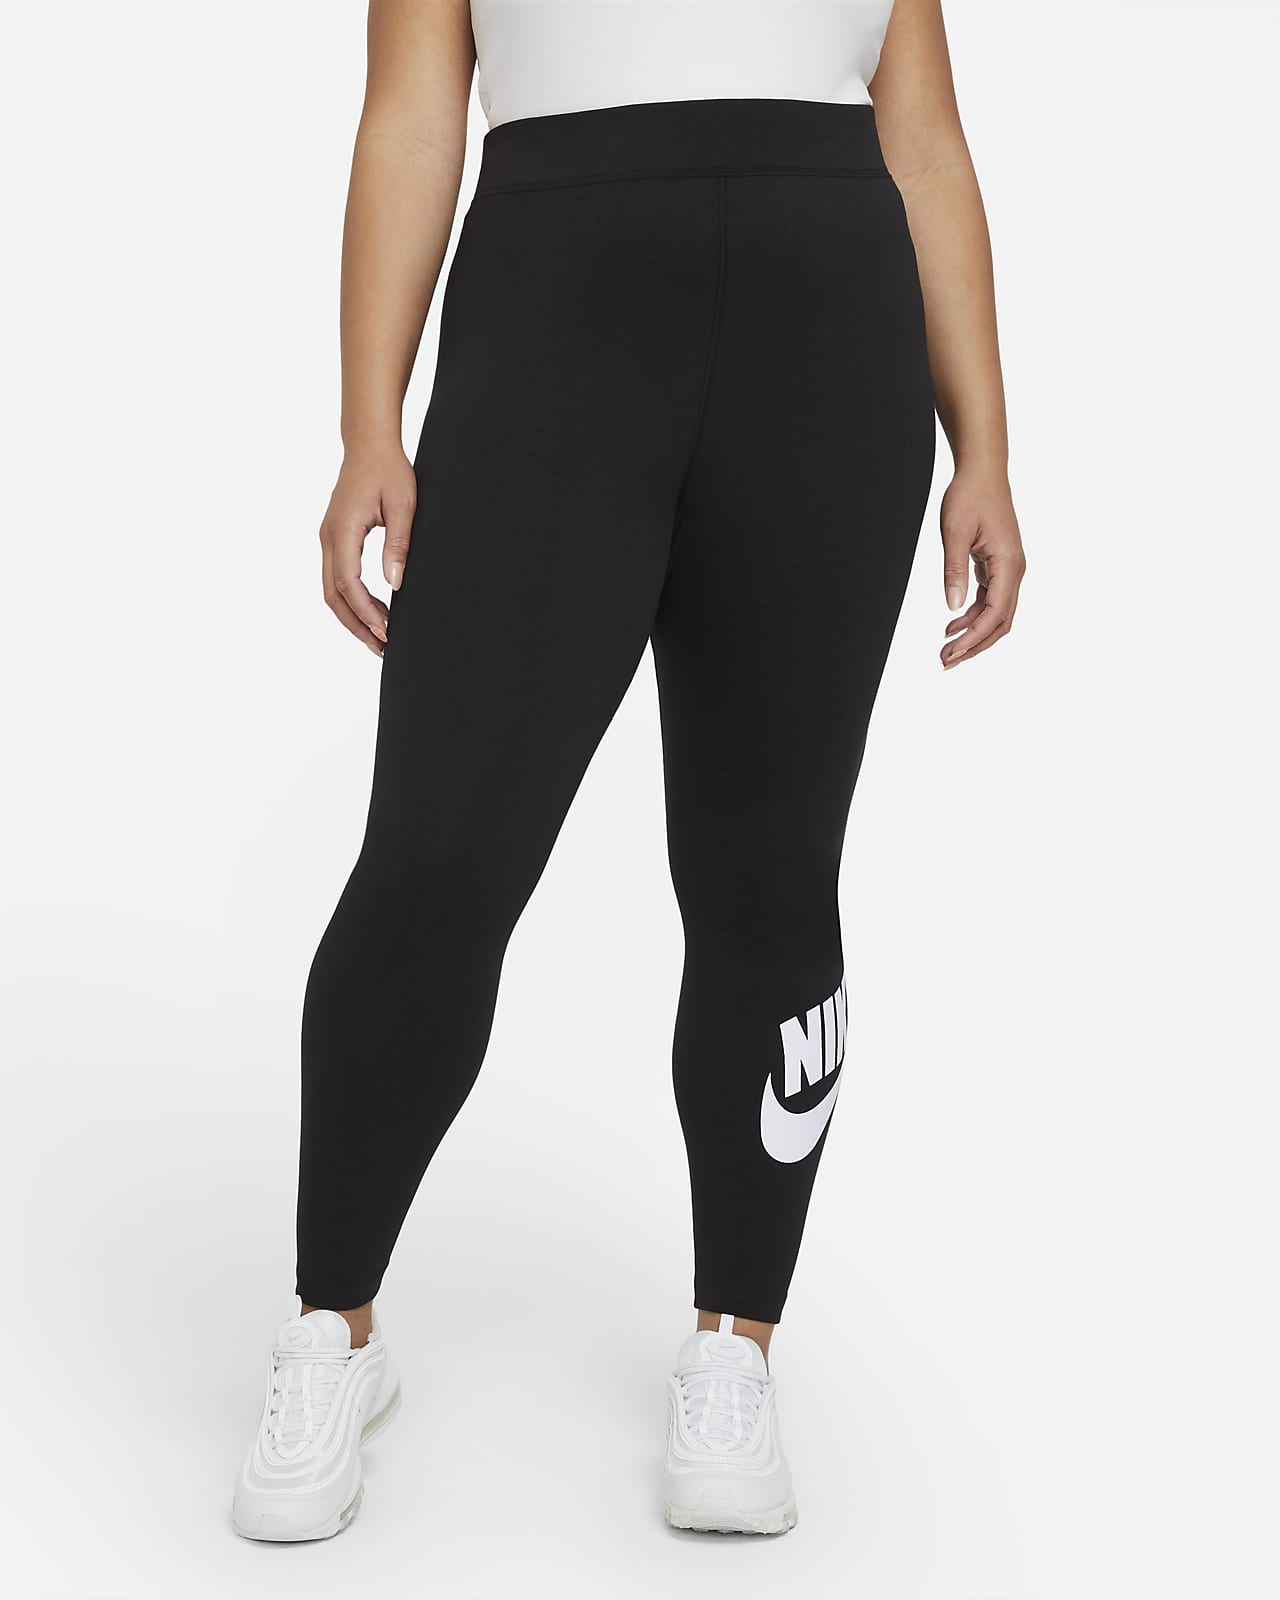 Nike Sportswear Women's High-Waisted Leggings (Plus Size). Nike .com